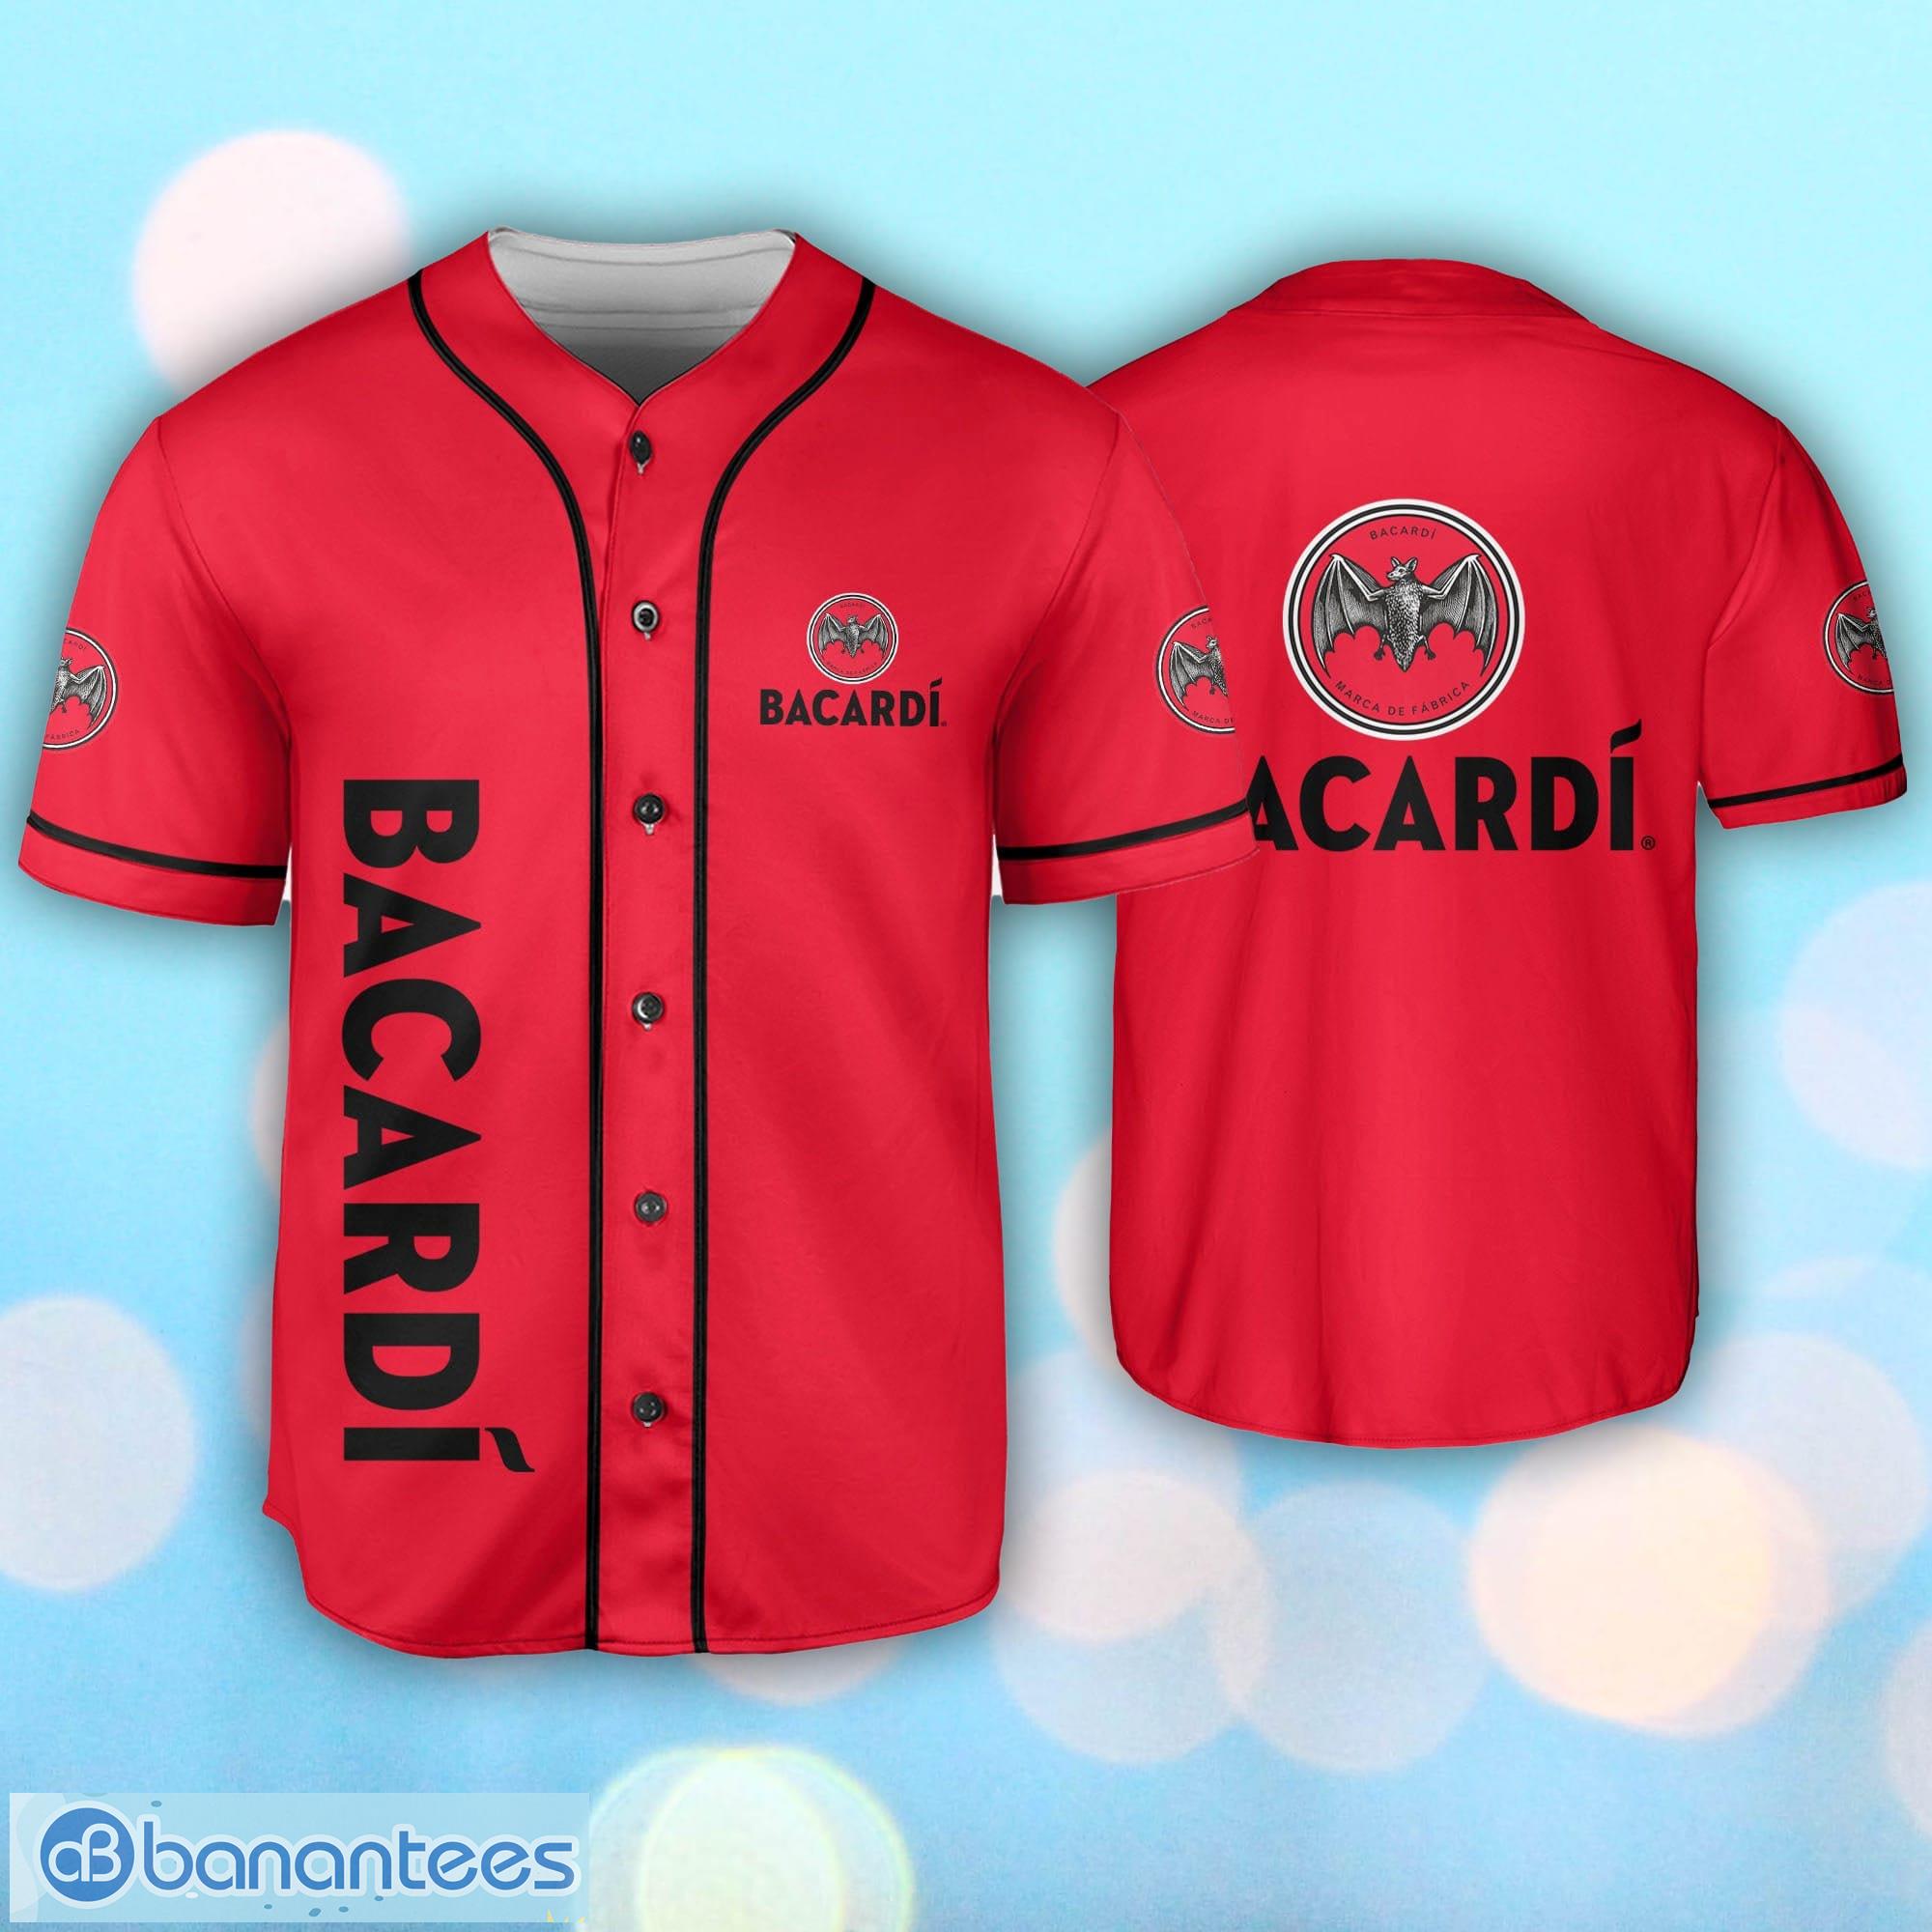 Bacardi Red Baseball Jersey Shirt, Jersey gift For Men, Baseball Shirt -  Banantees